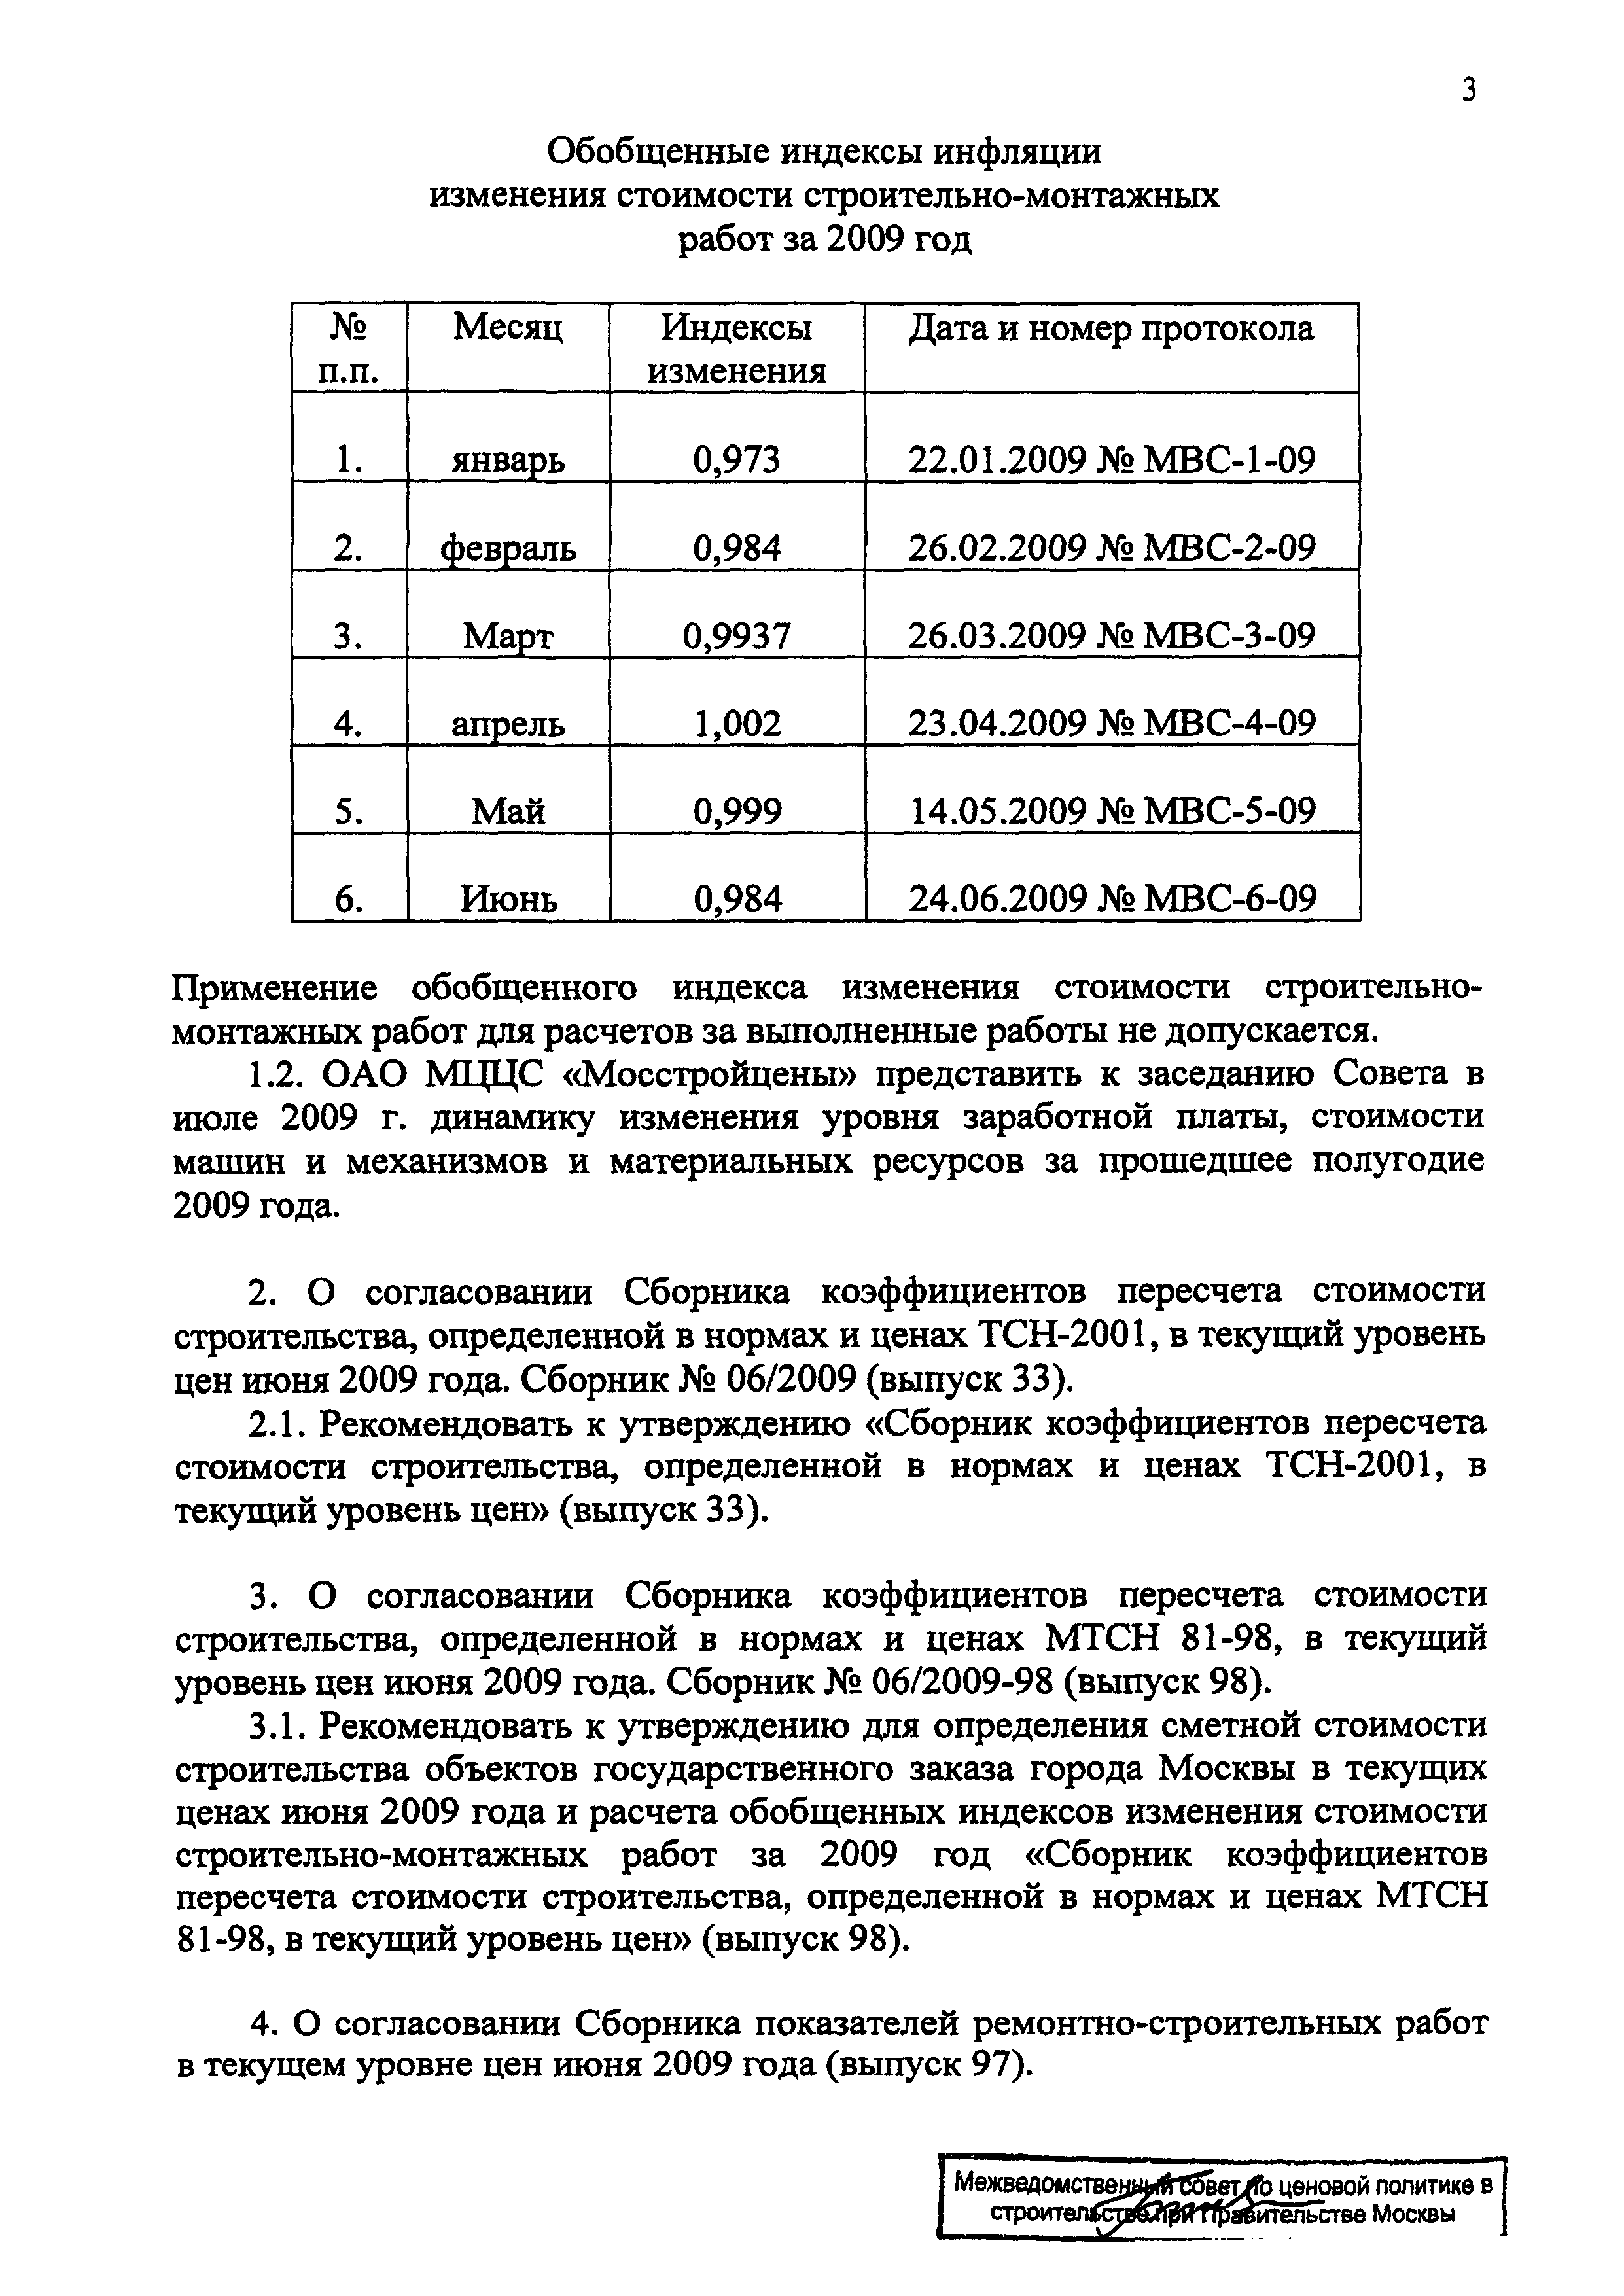 Протокол МВС-6-09